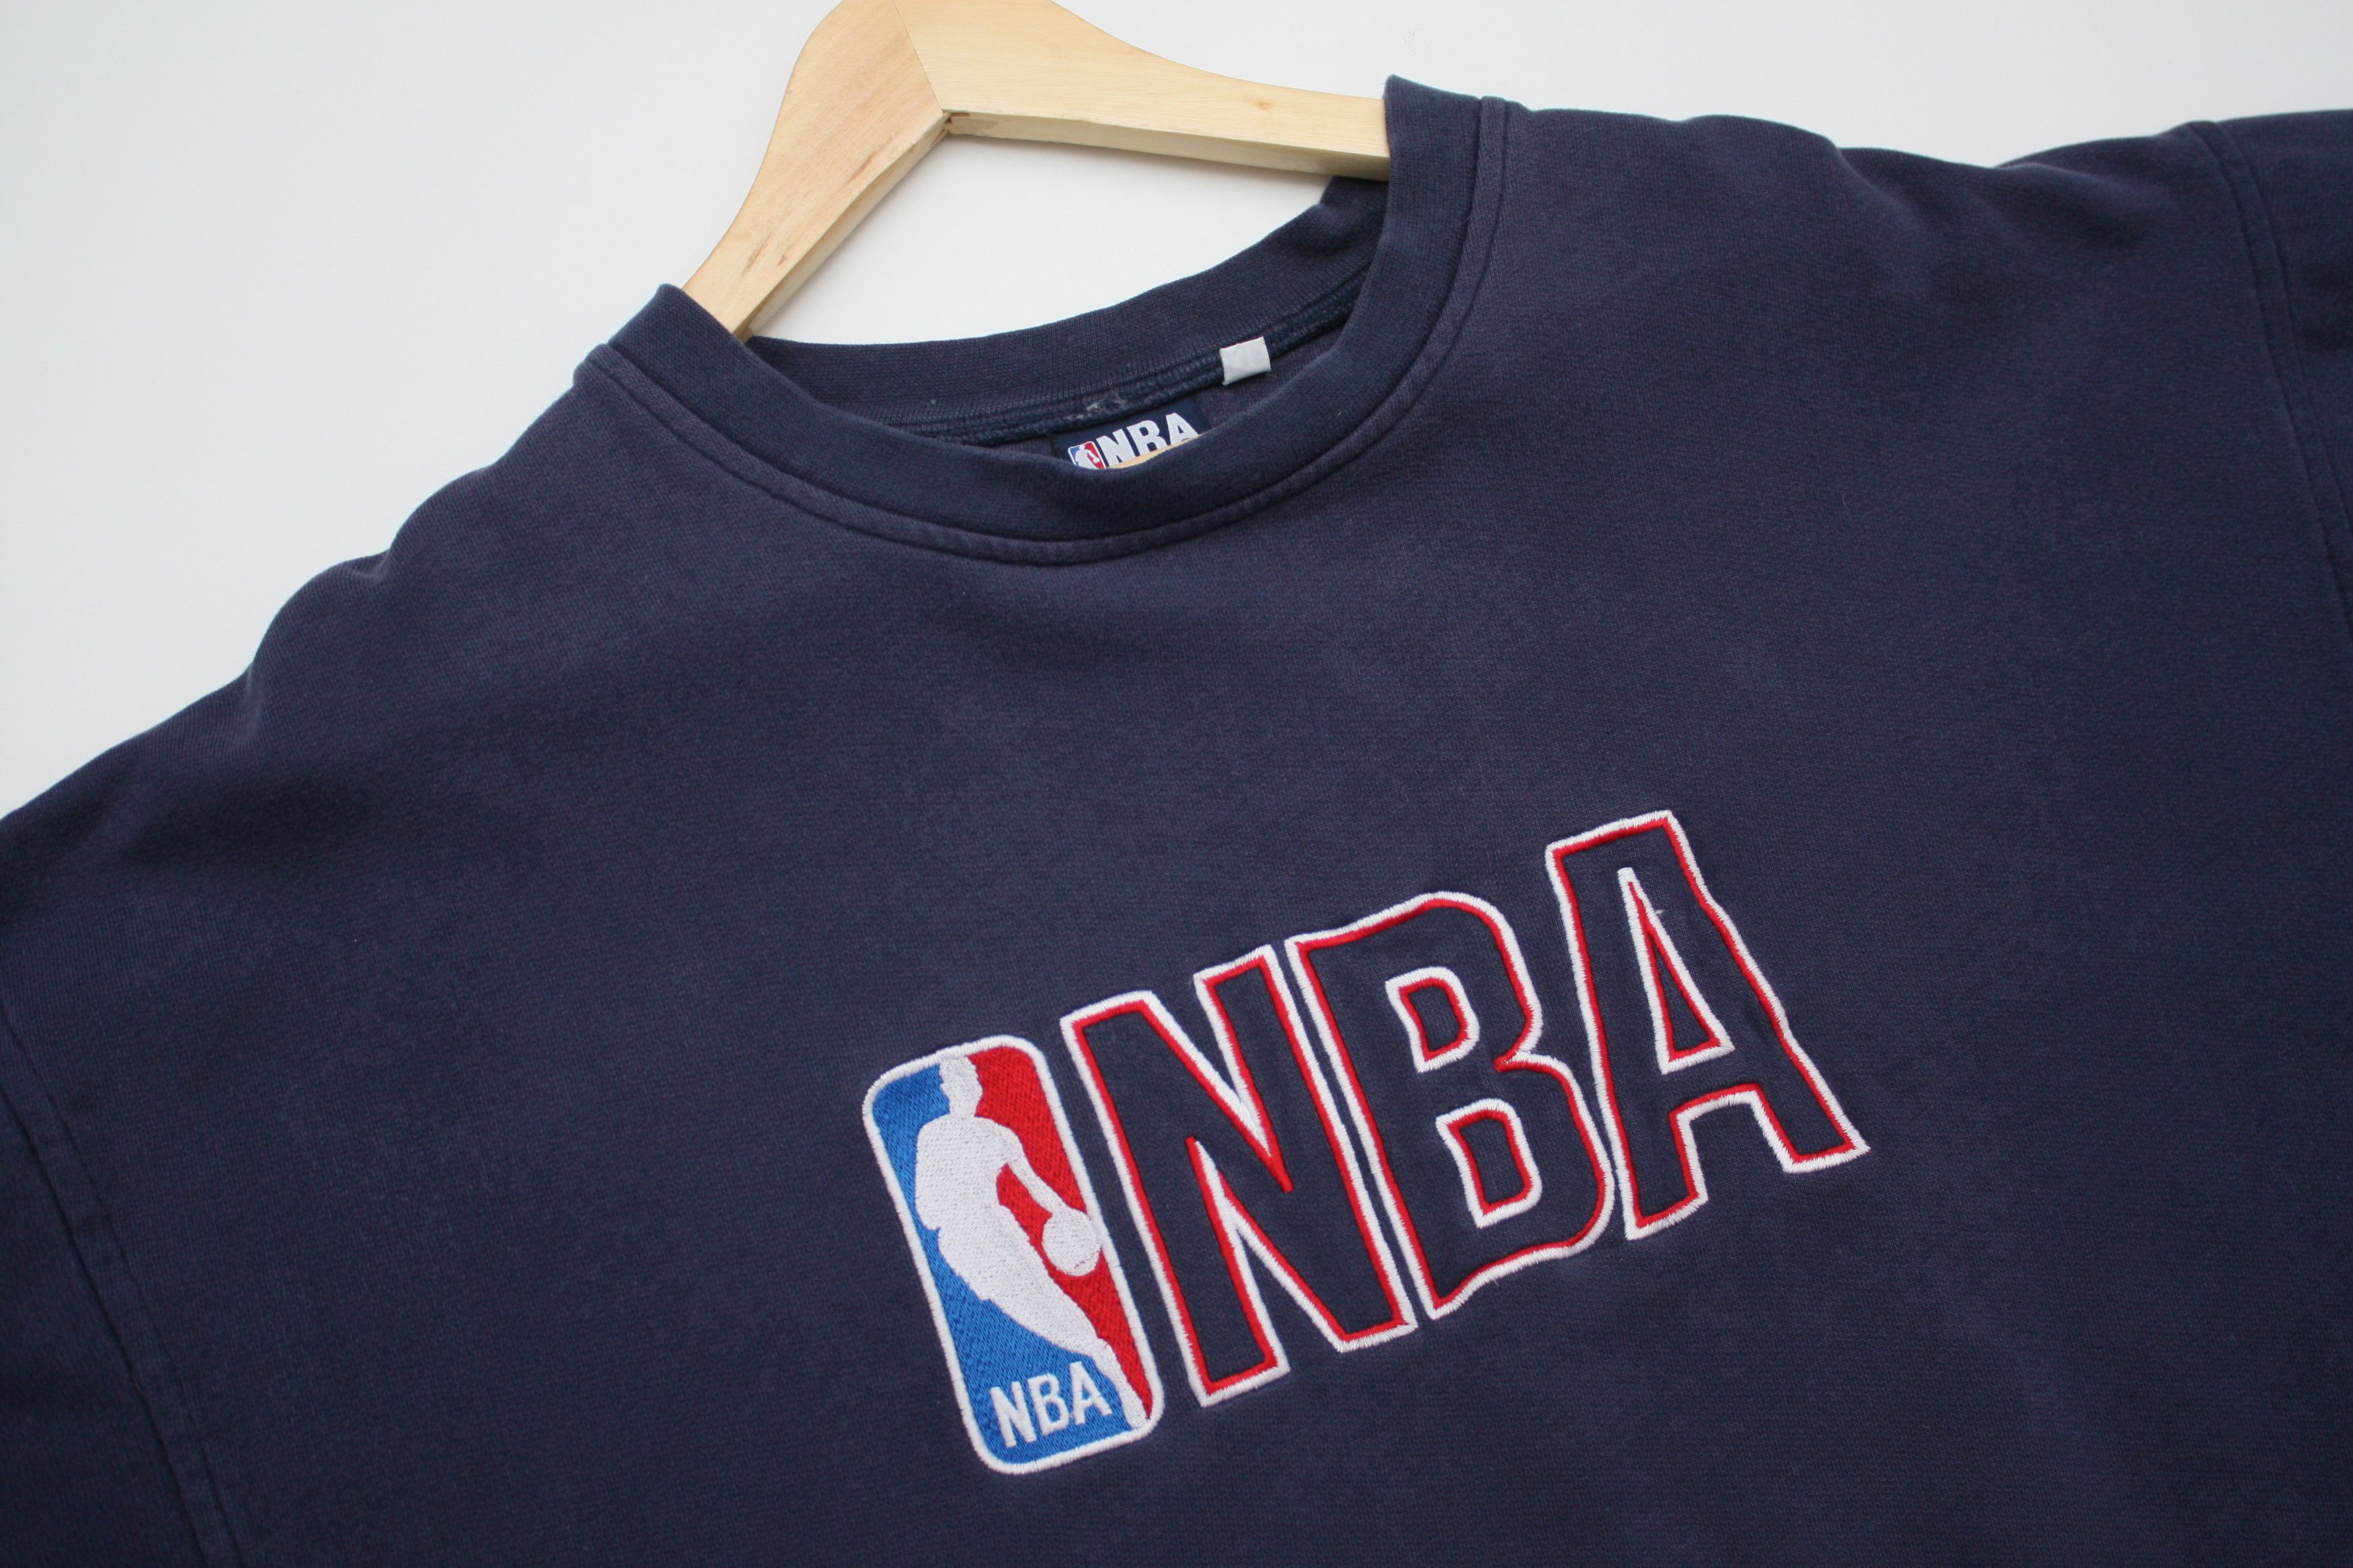 Vintage NBA Vintage Ultra Rare Navy Blue Sweatshirt Crewneck Size US XL / EU 56 / 4 - 2 Preview